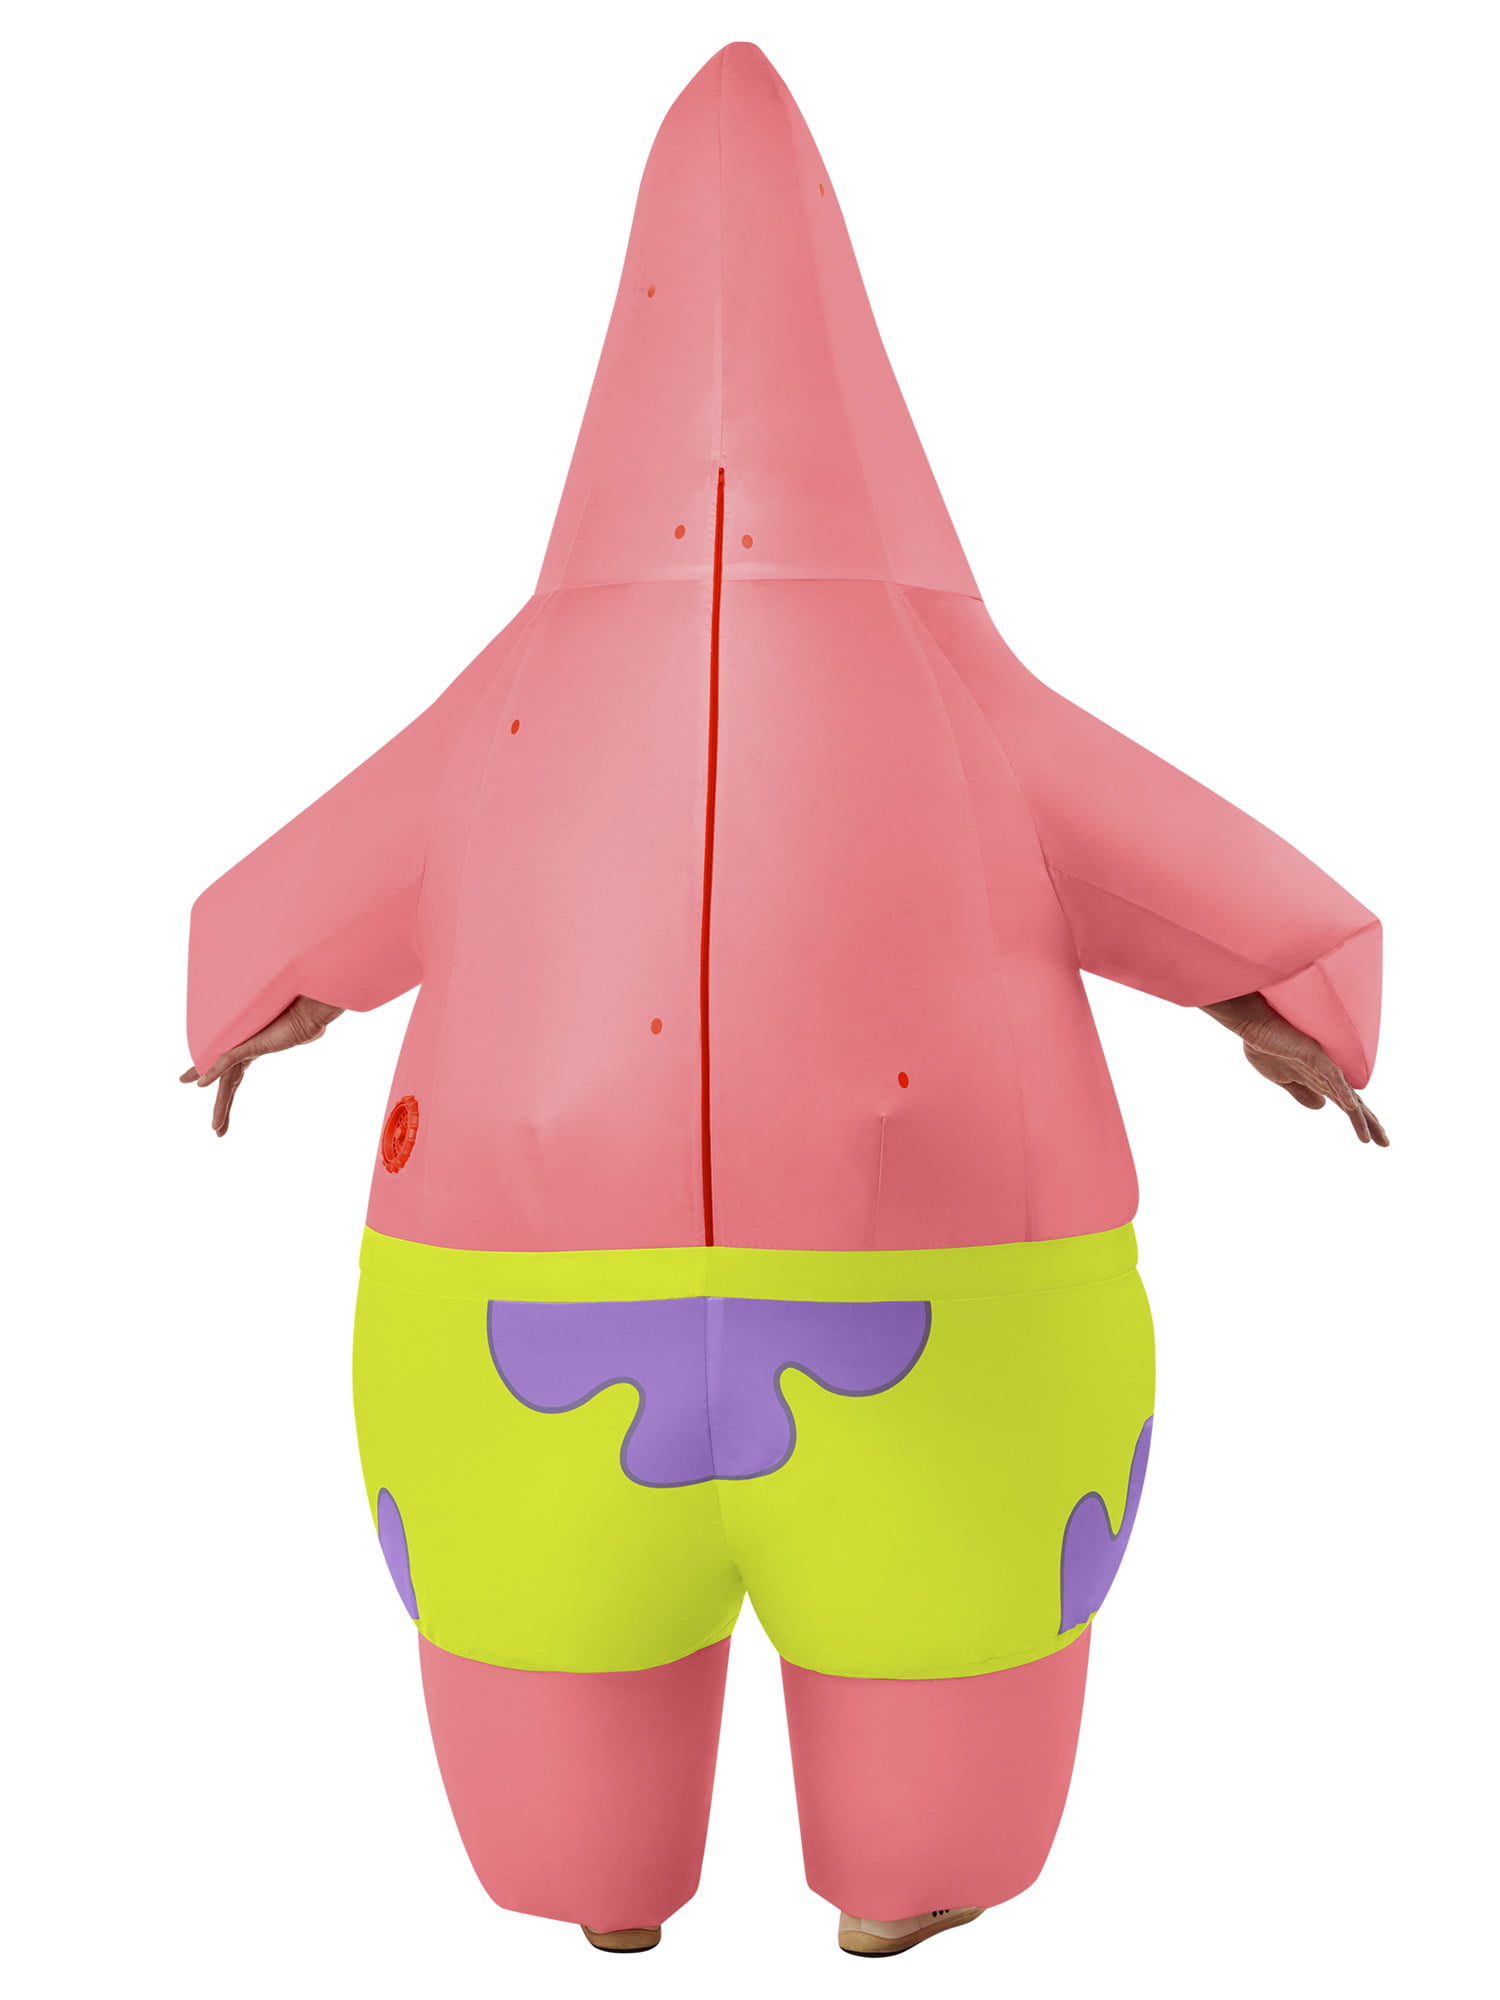 Spongebob Squarepants: Patrick Star Adult Inflatable Costume 